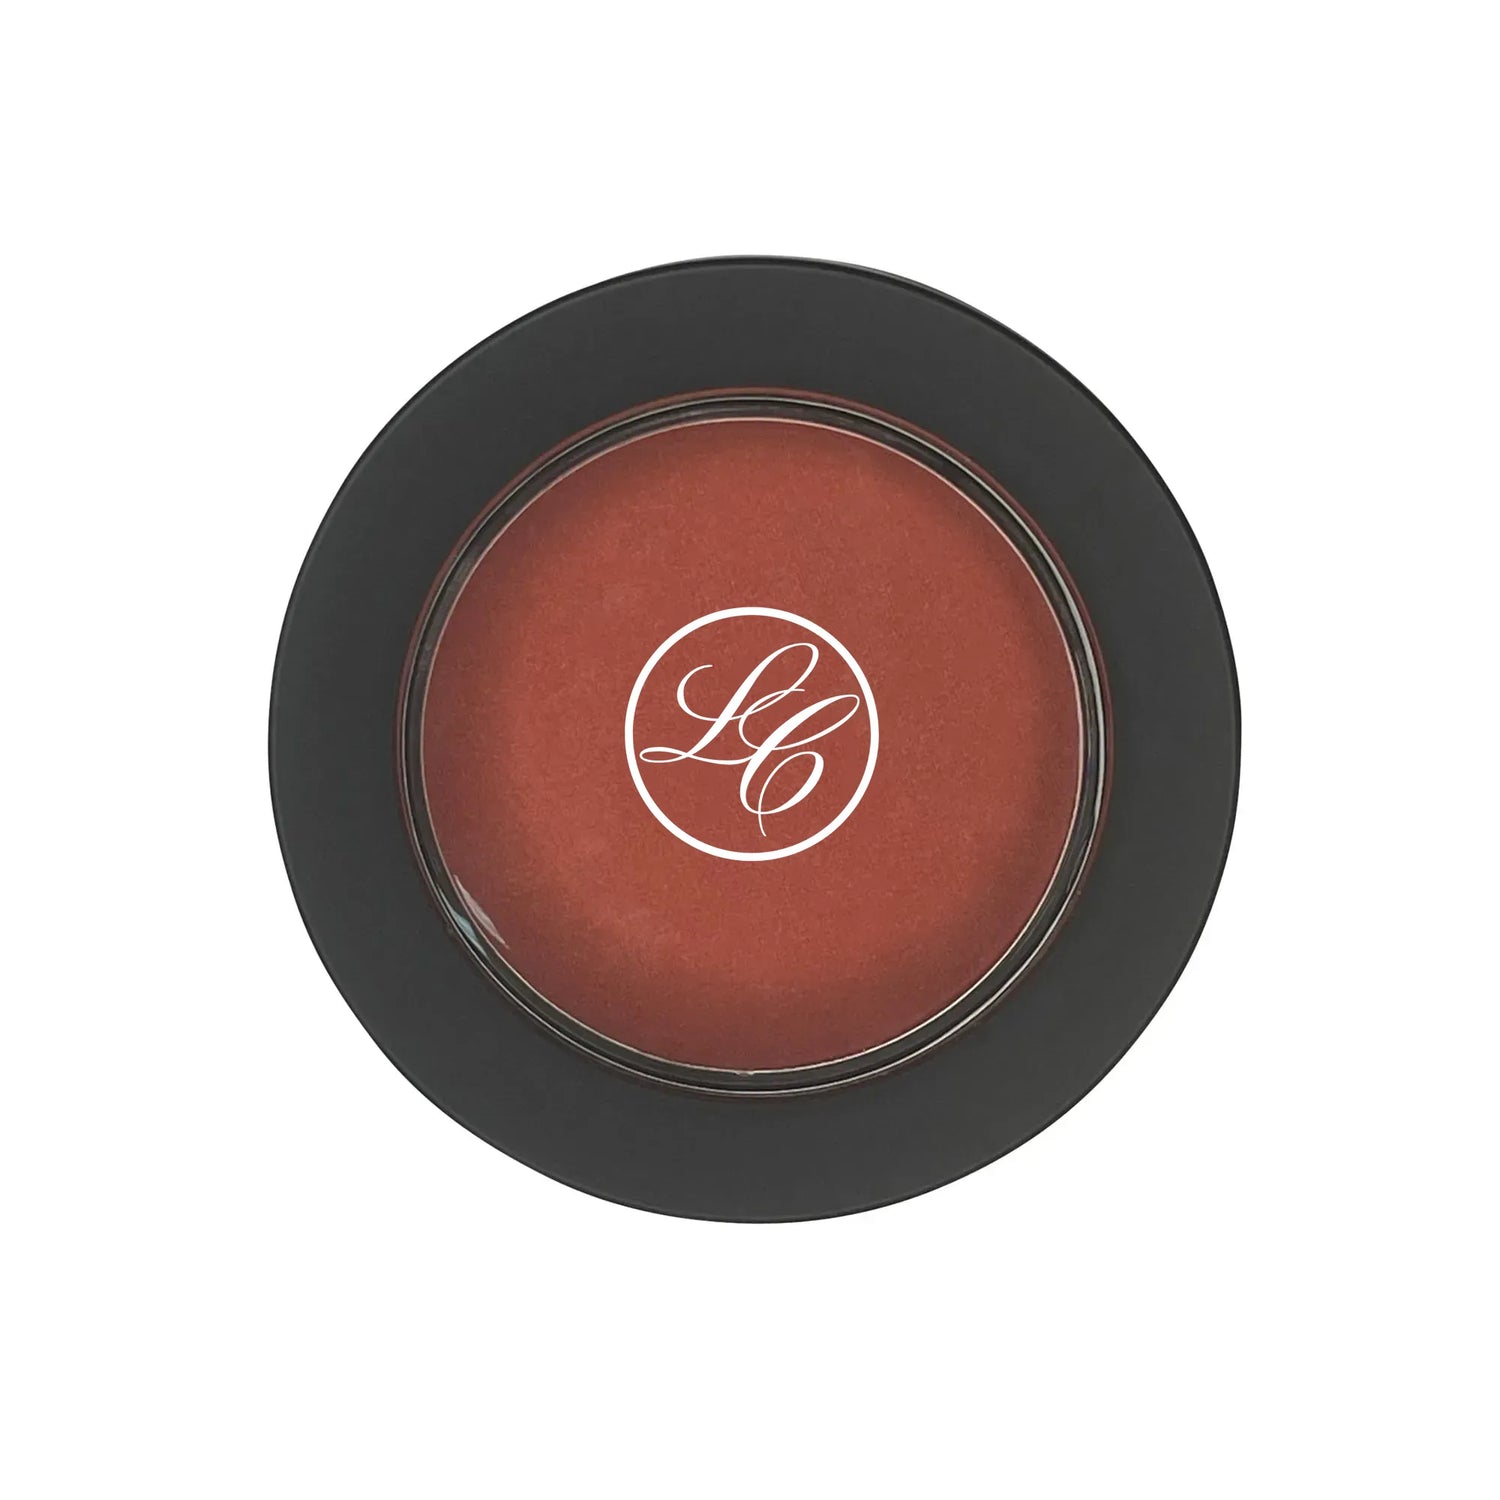 Single Pan Blush - Snapdragon - Lunox Cosmetics